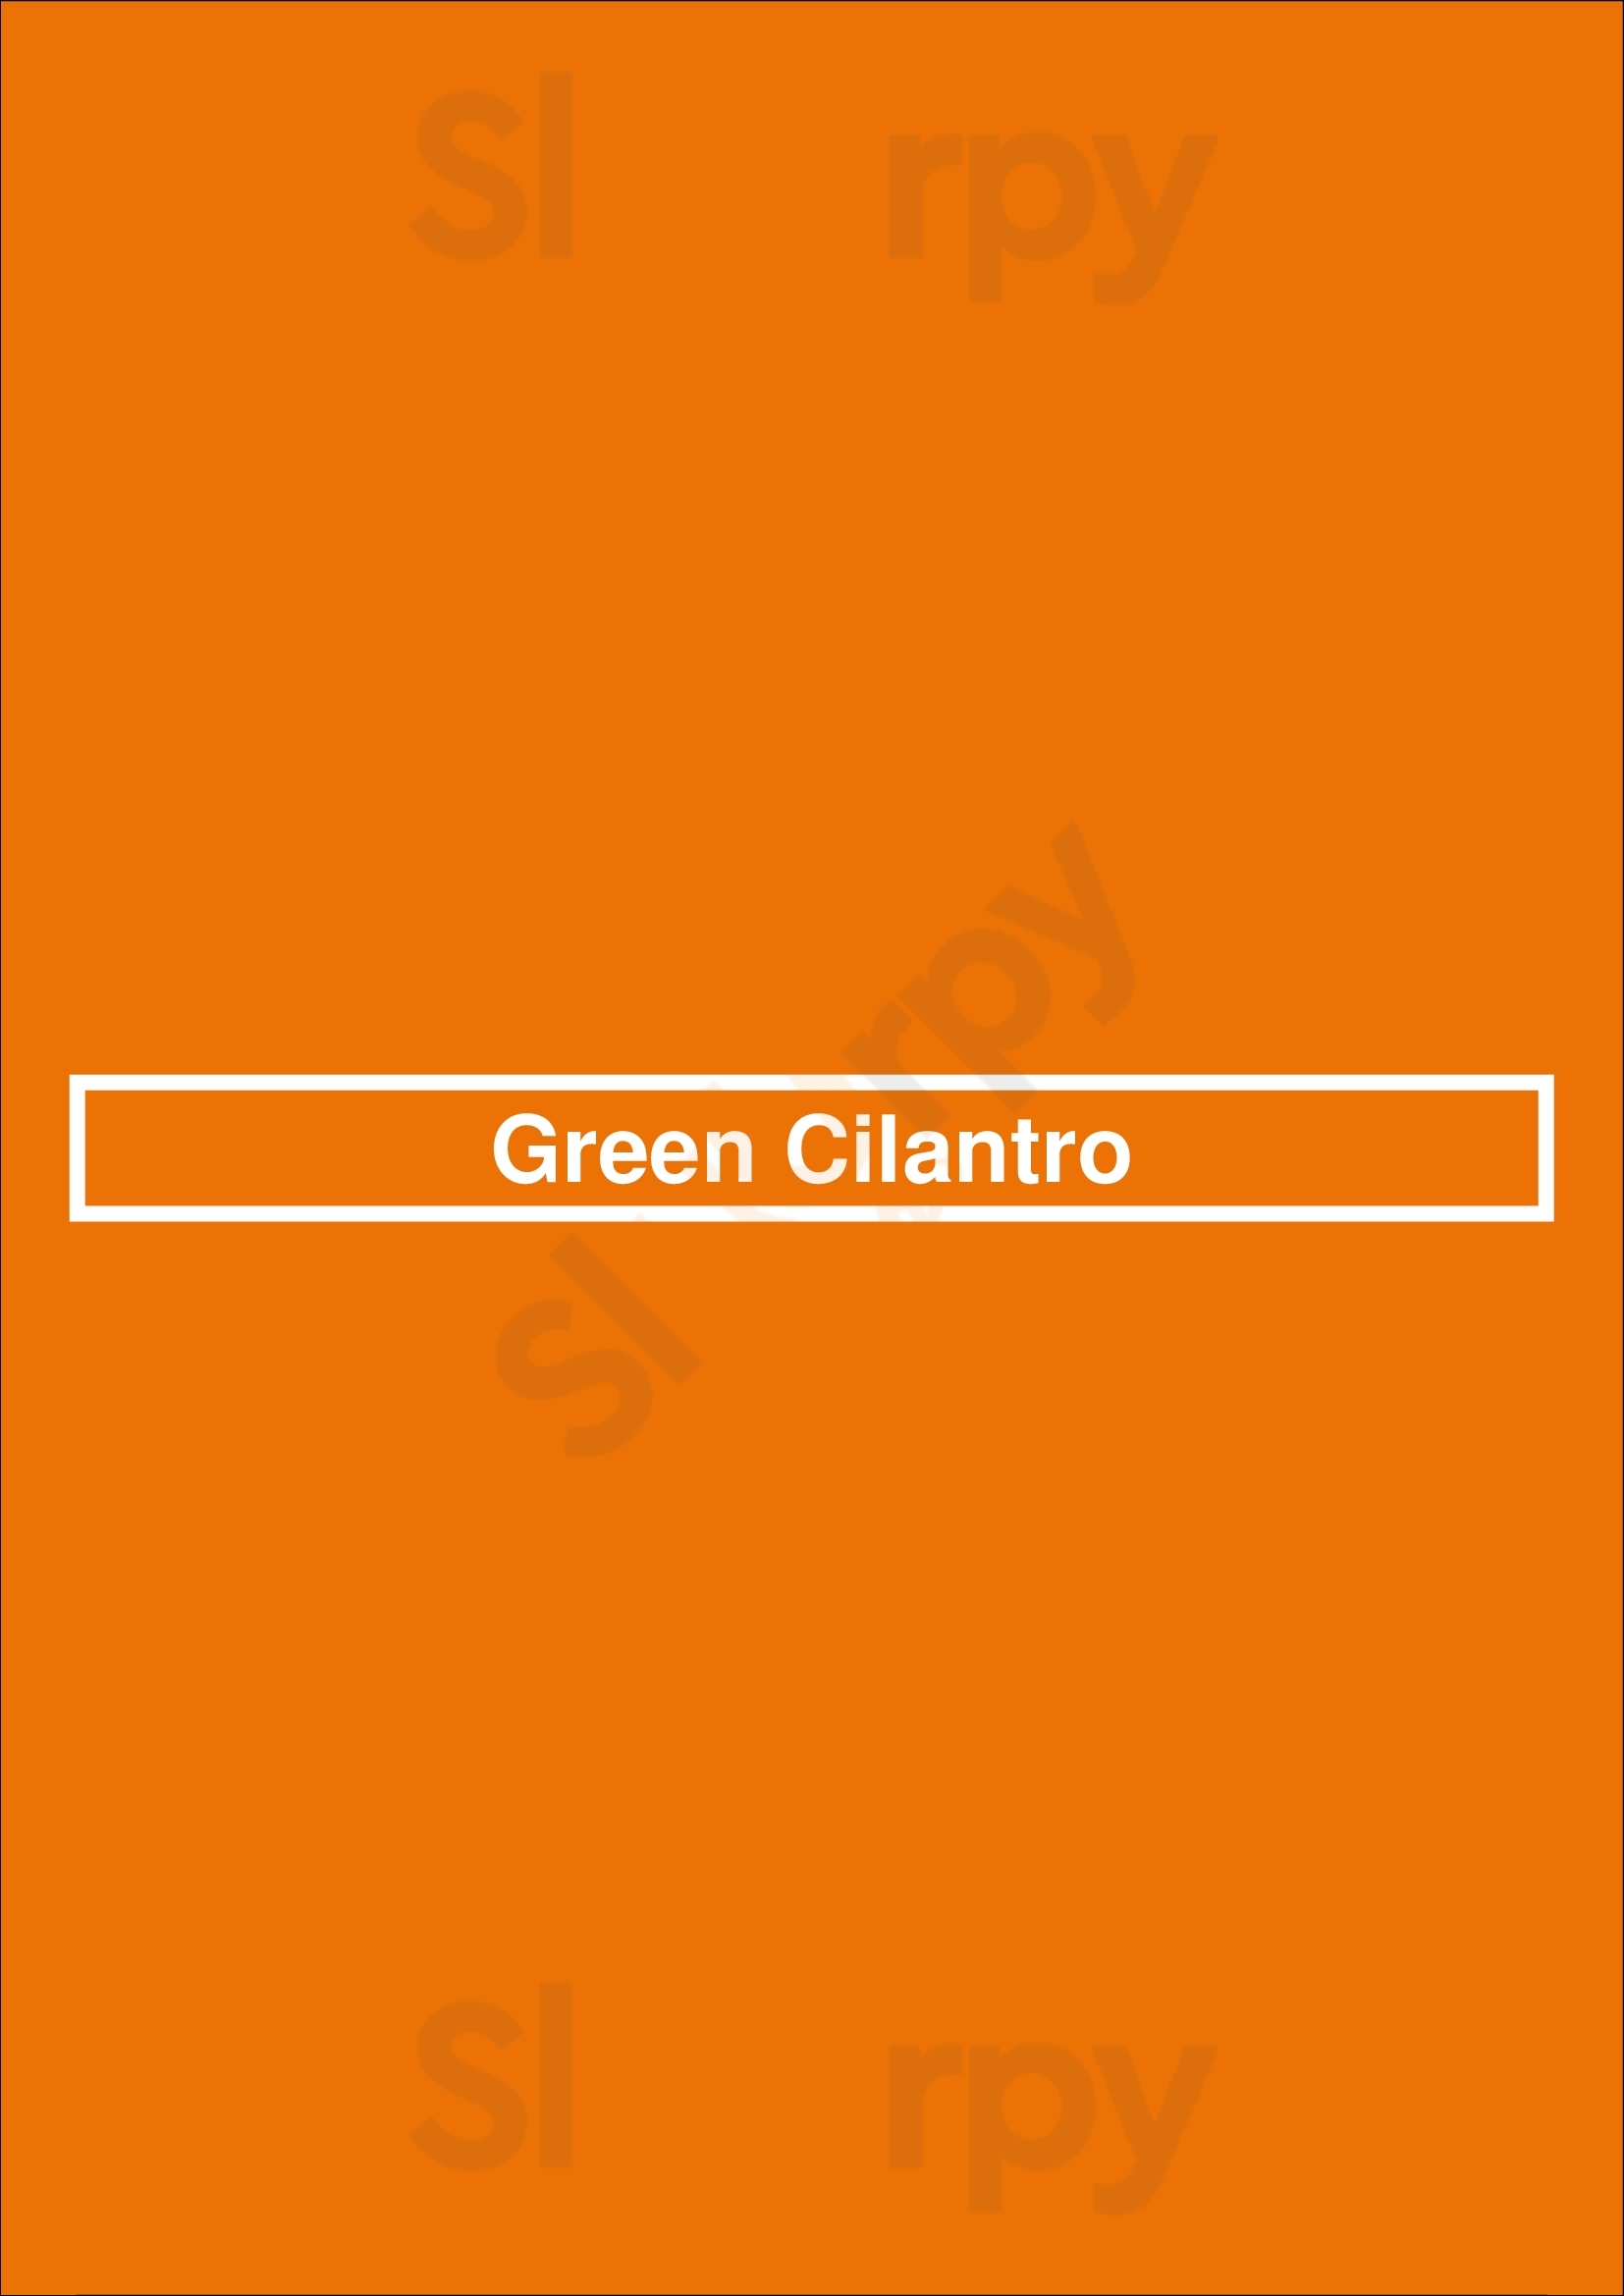 Green Cilantro Calgary Menu - 1